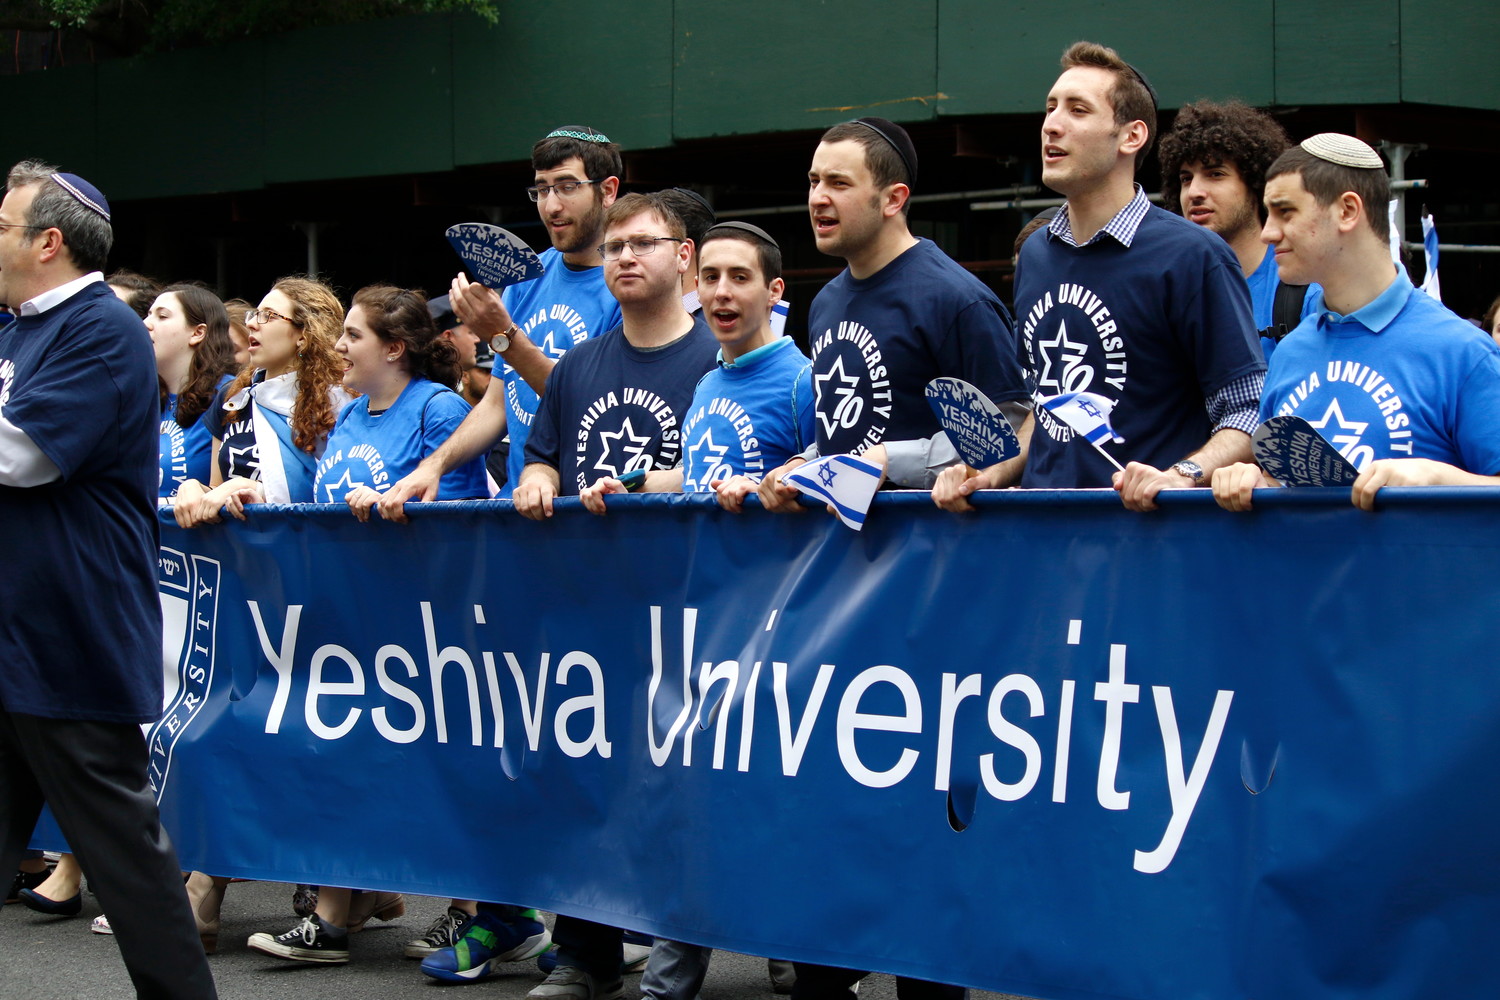 Some of the marchers representing Yeshiva University.